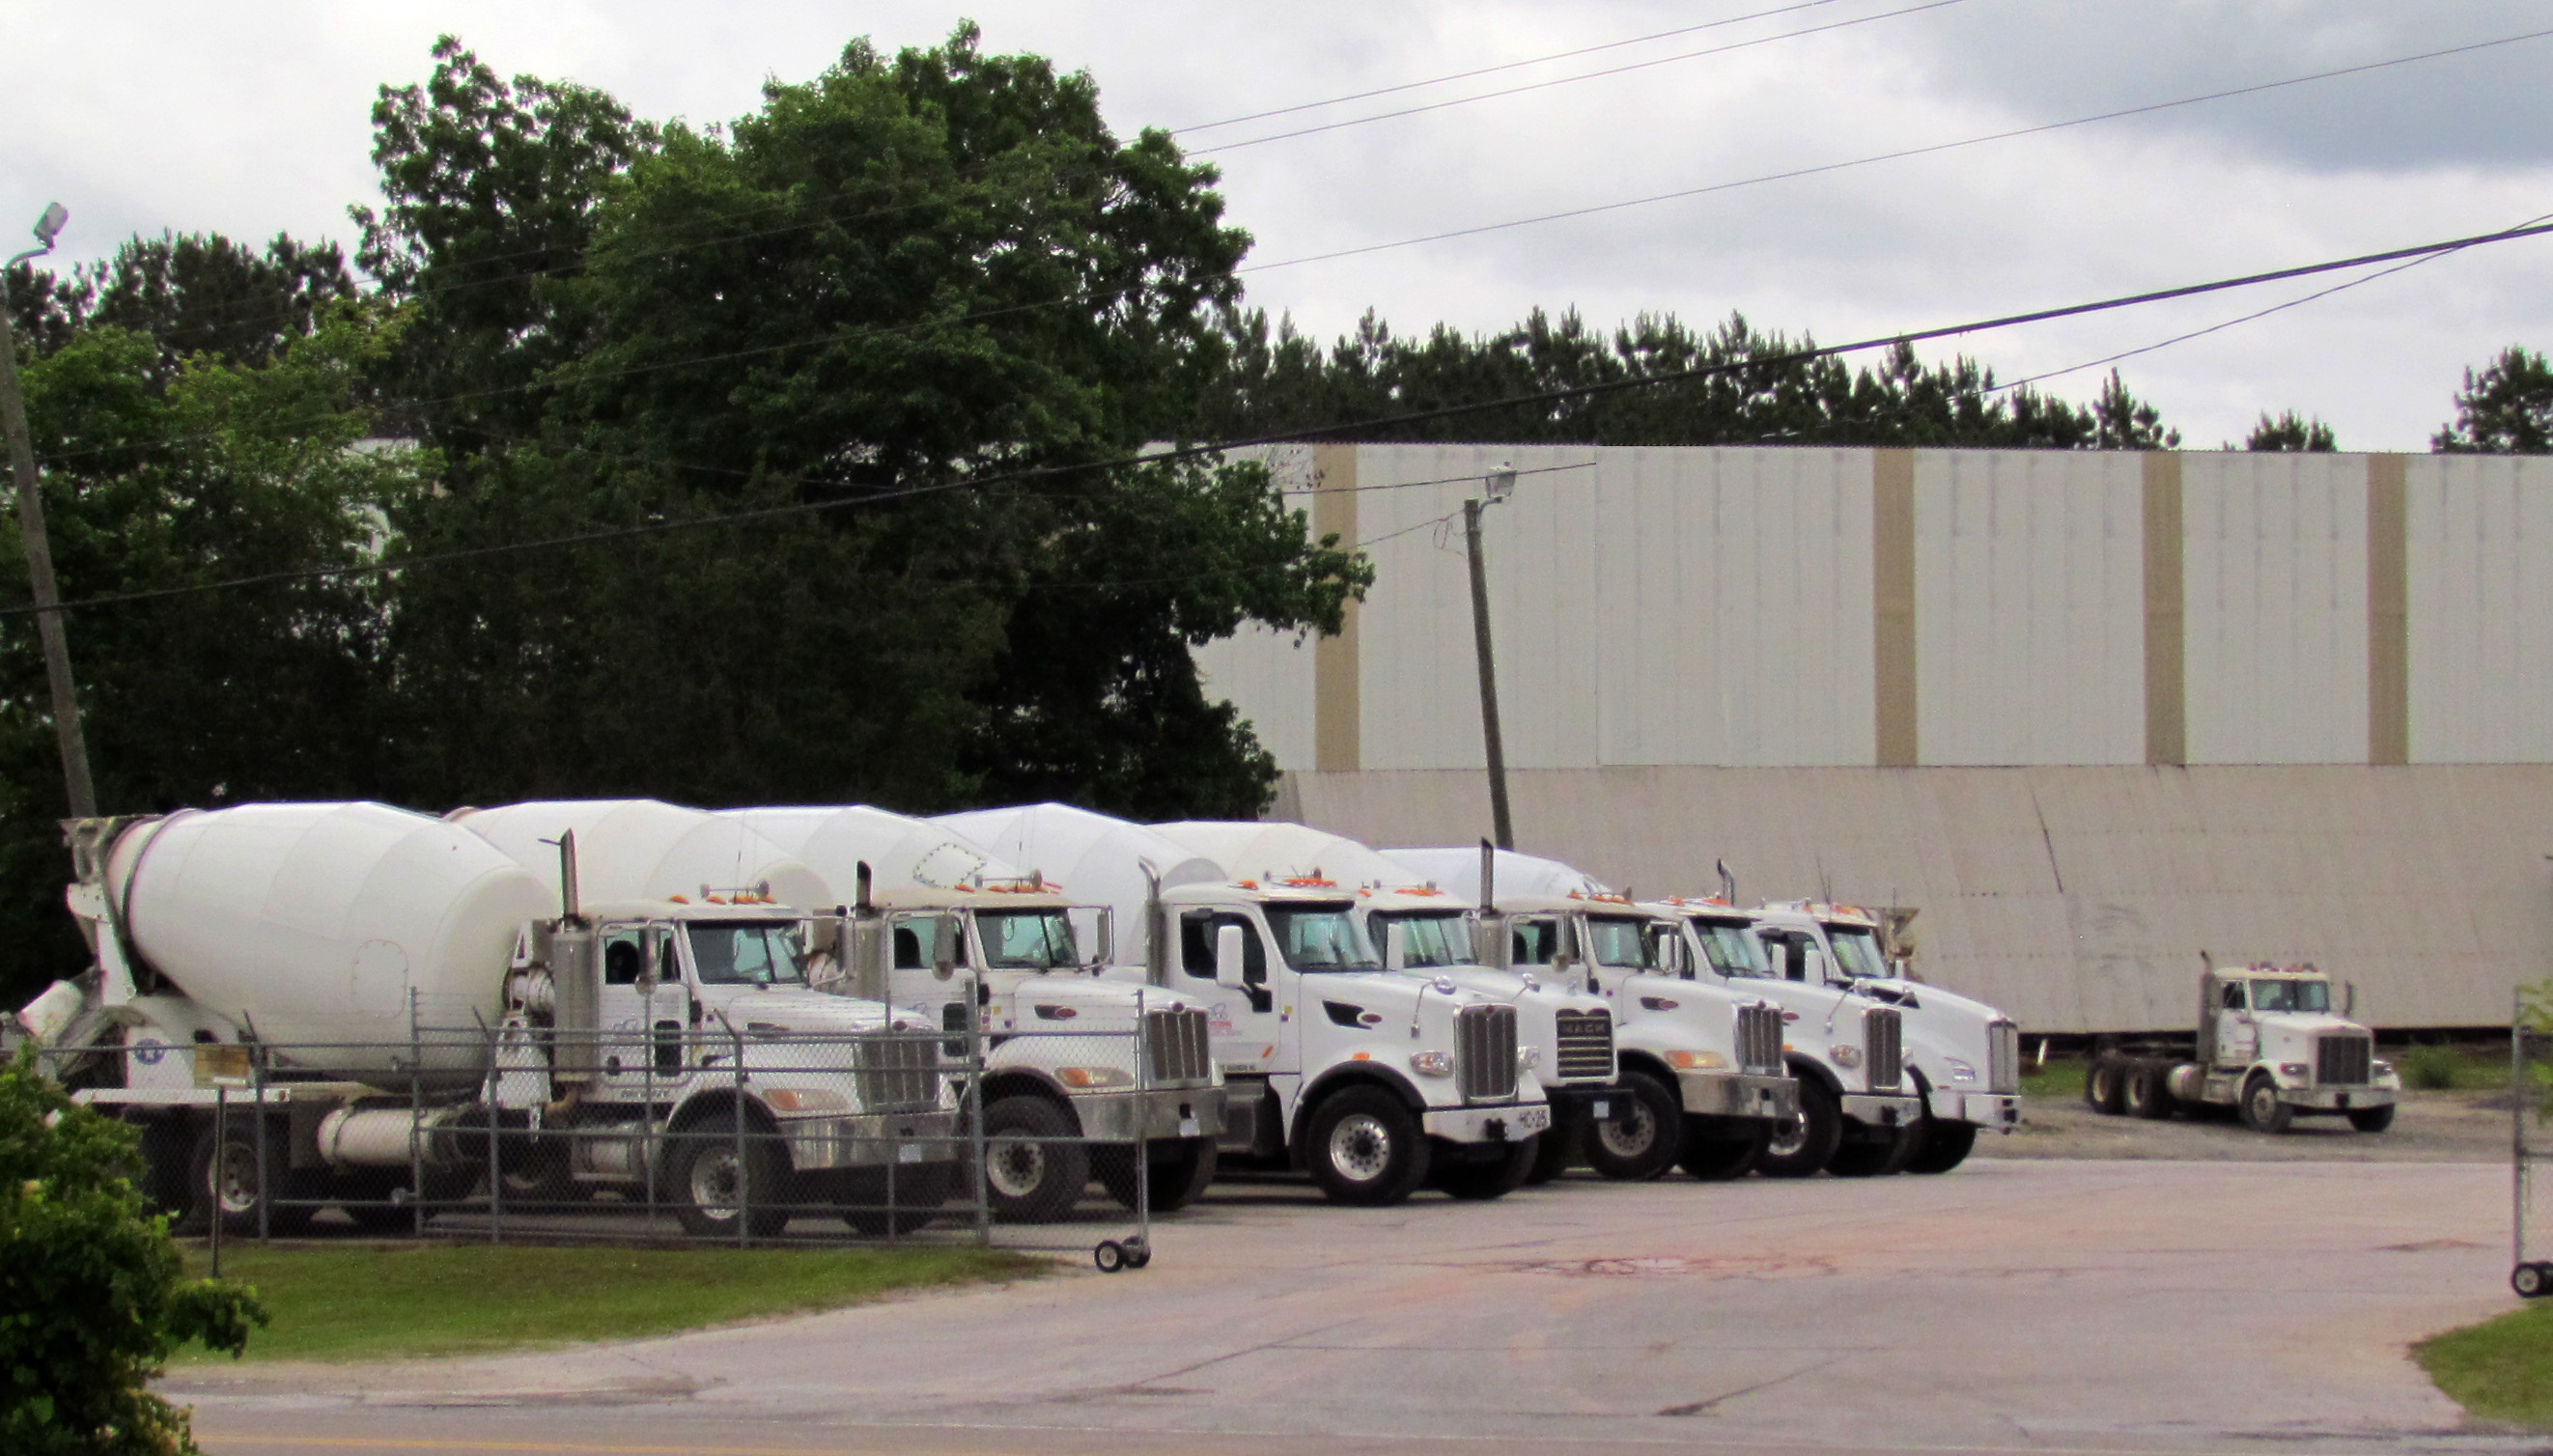 Fleet of Concrete Trucks